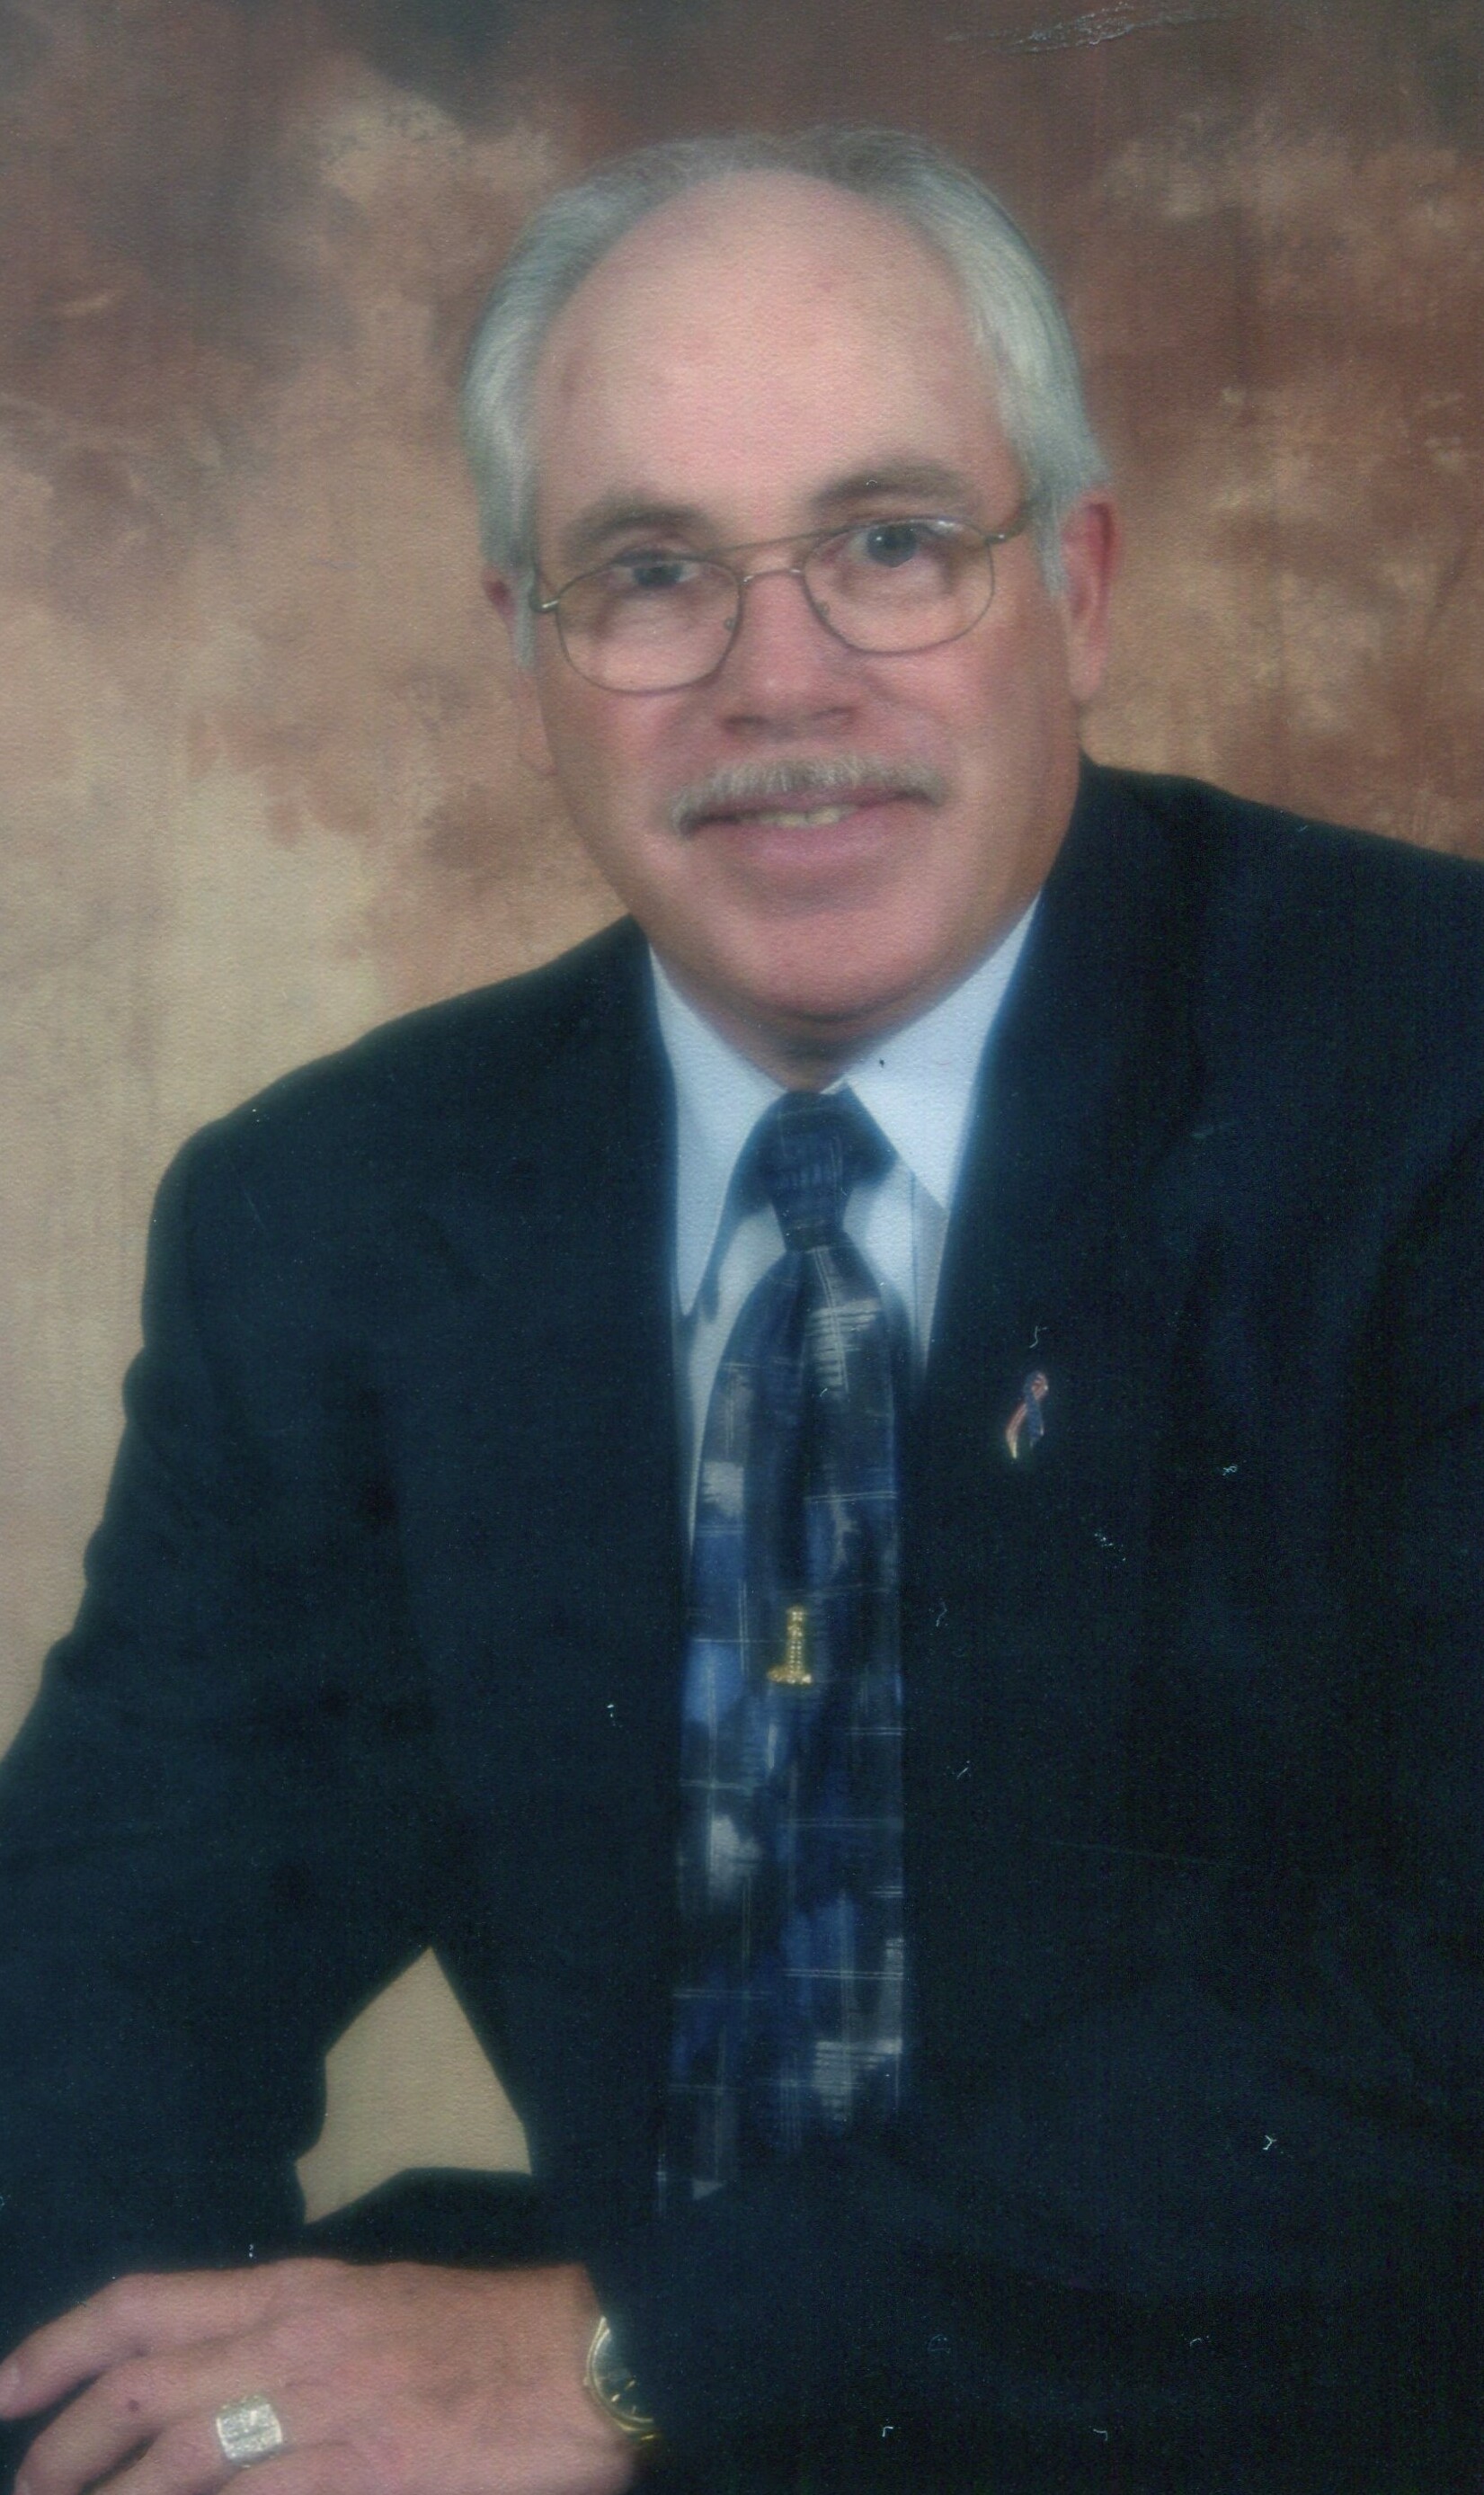 Robert Phillips Sr.